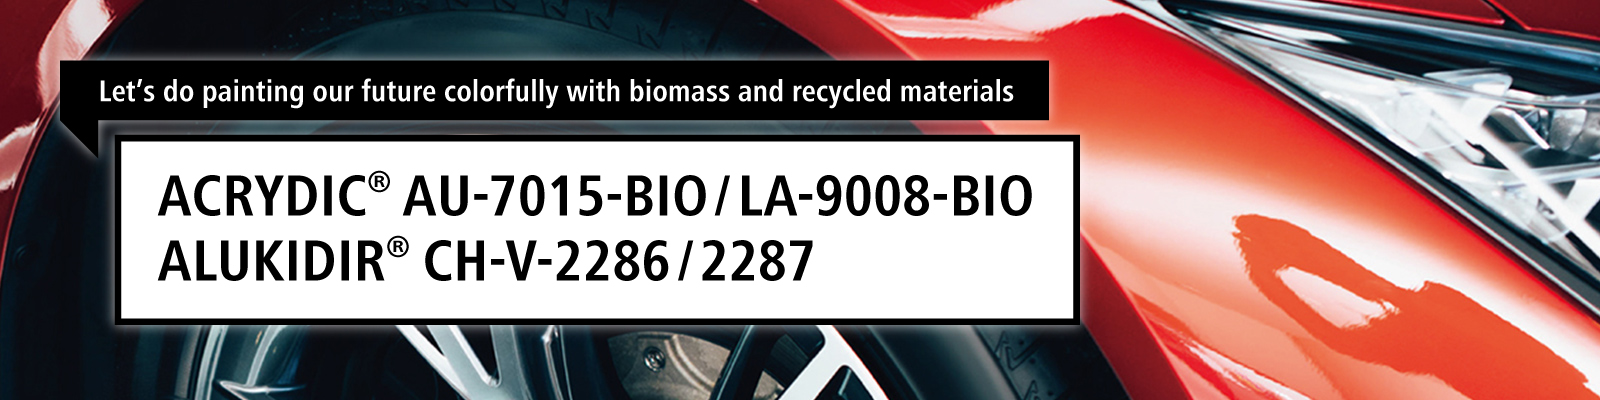 Biomass-derived acrylic resin